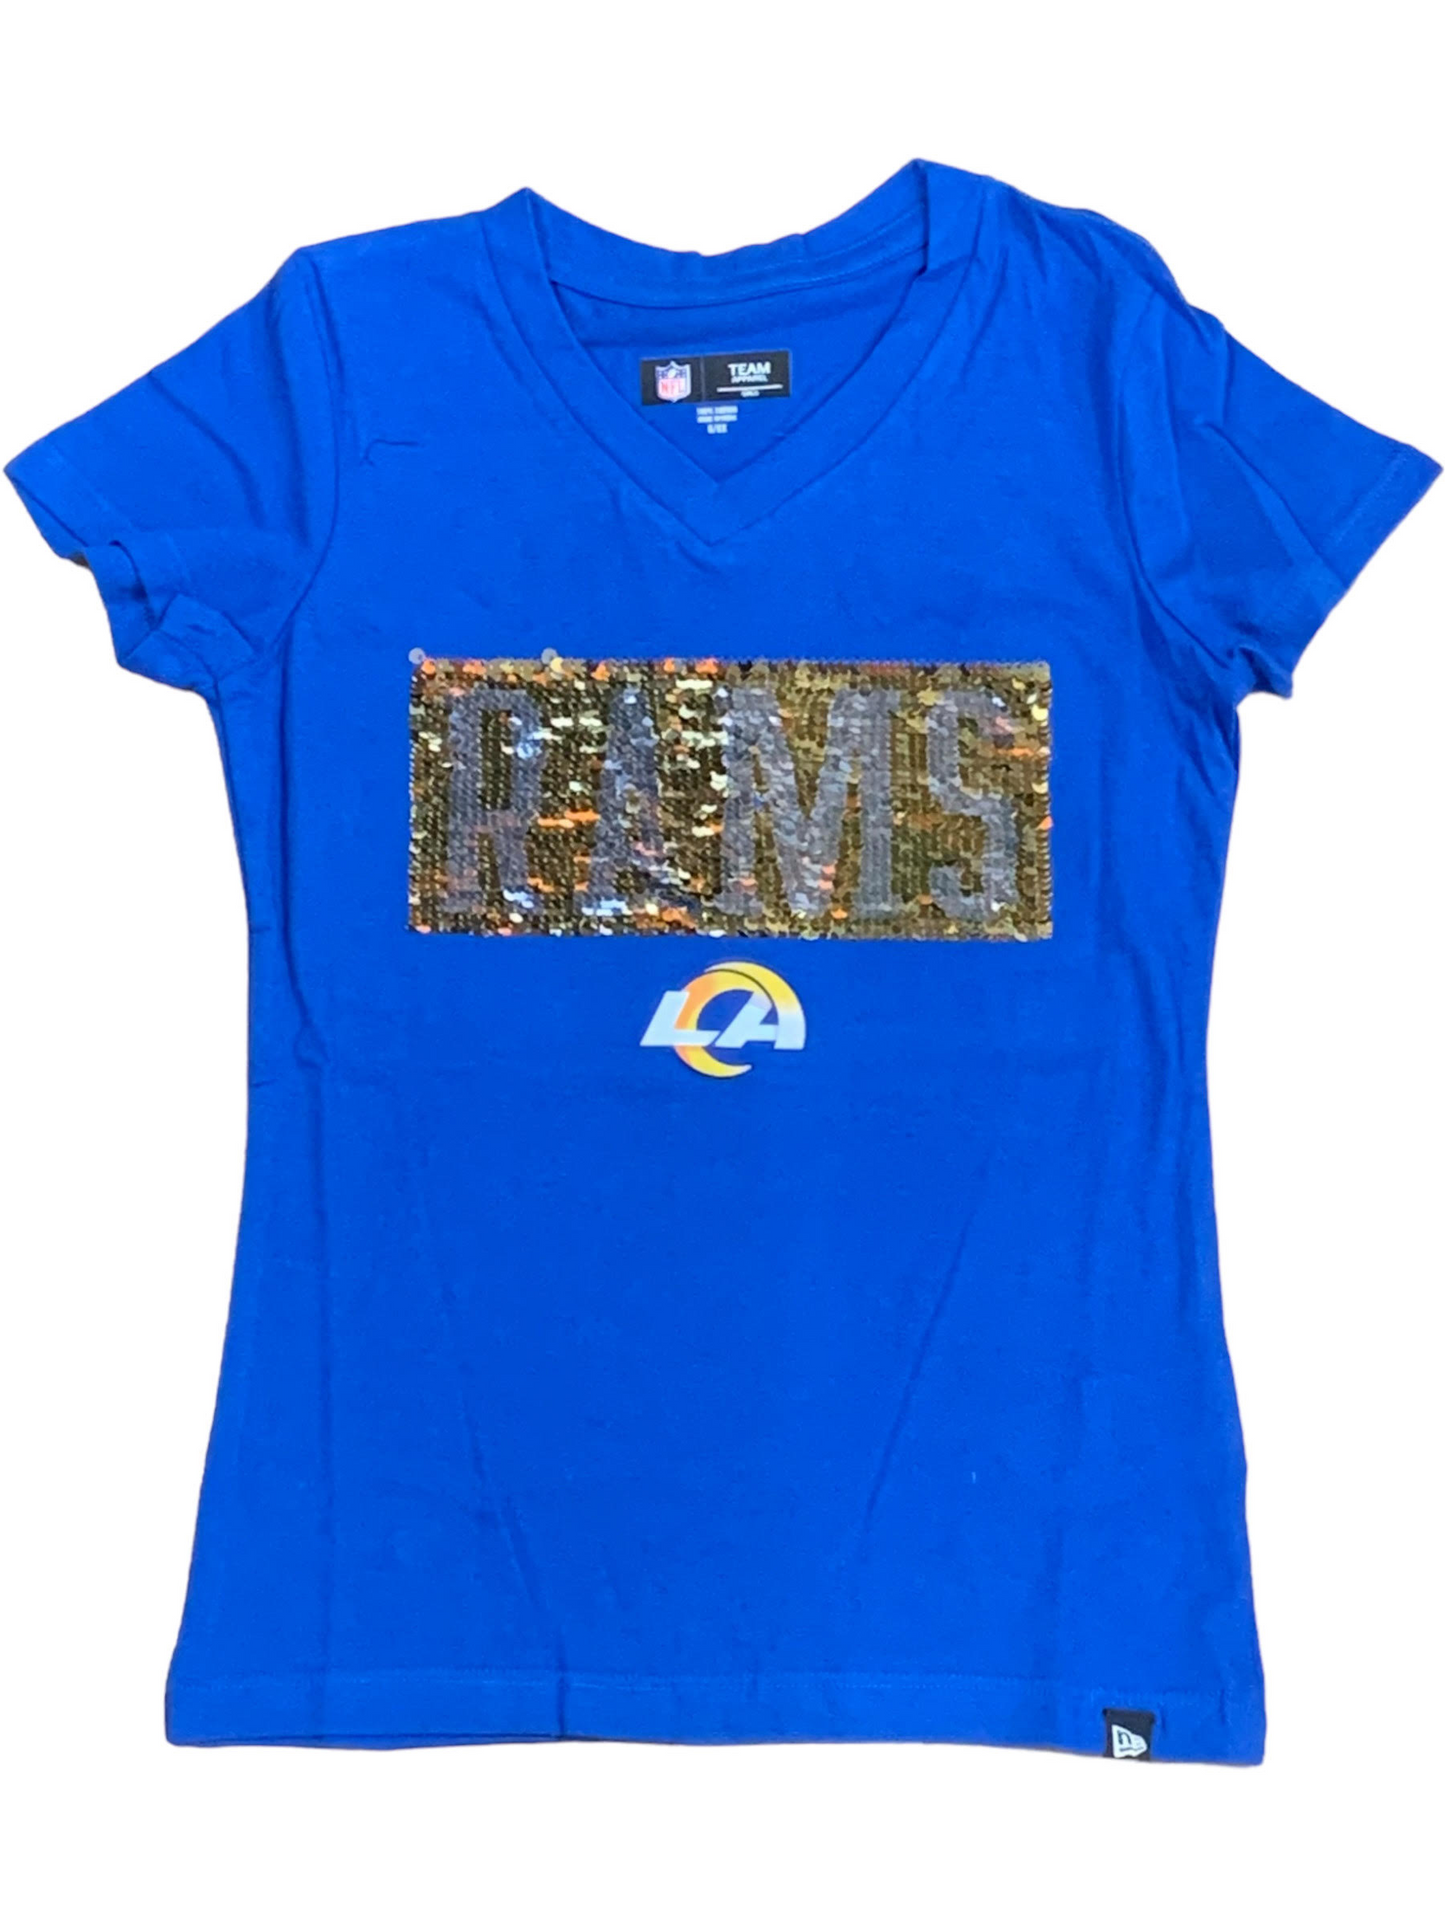 Los Angeles Rams Toddler Team Logo Long Sleeve T-Shirt - Royal